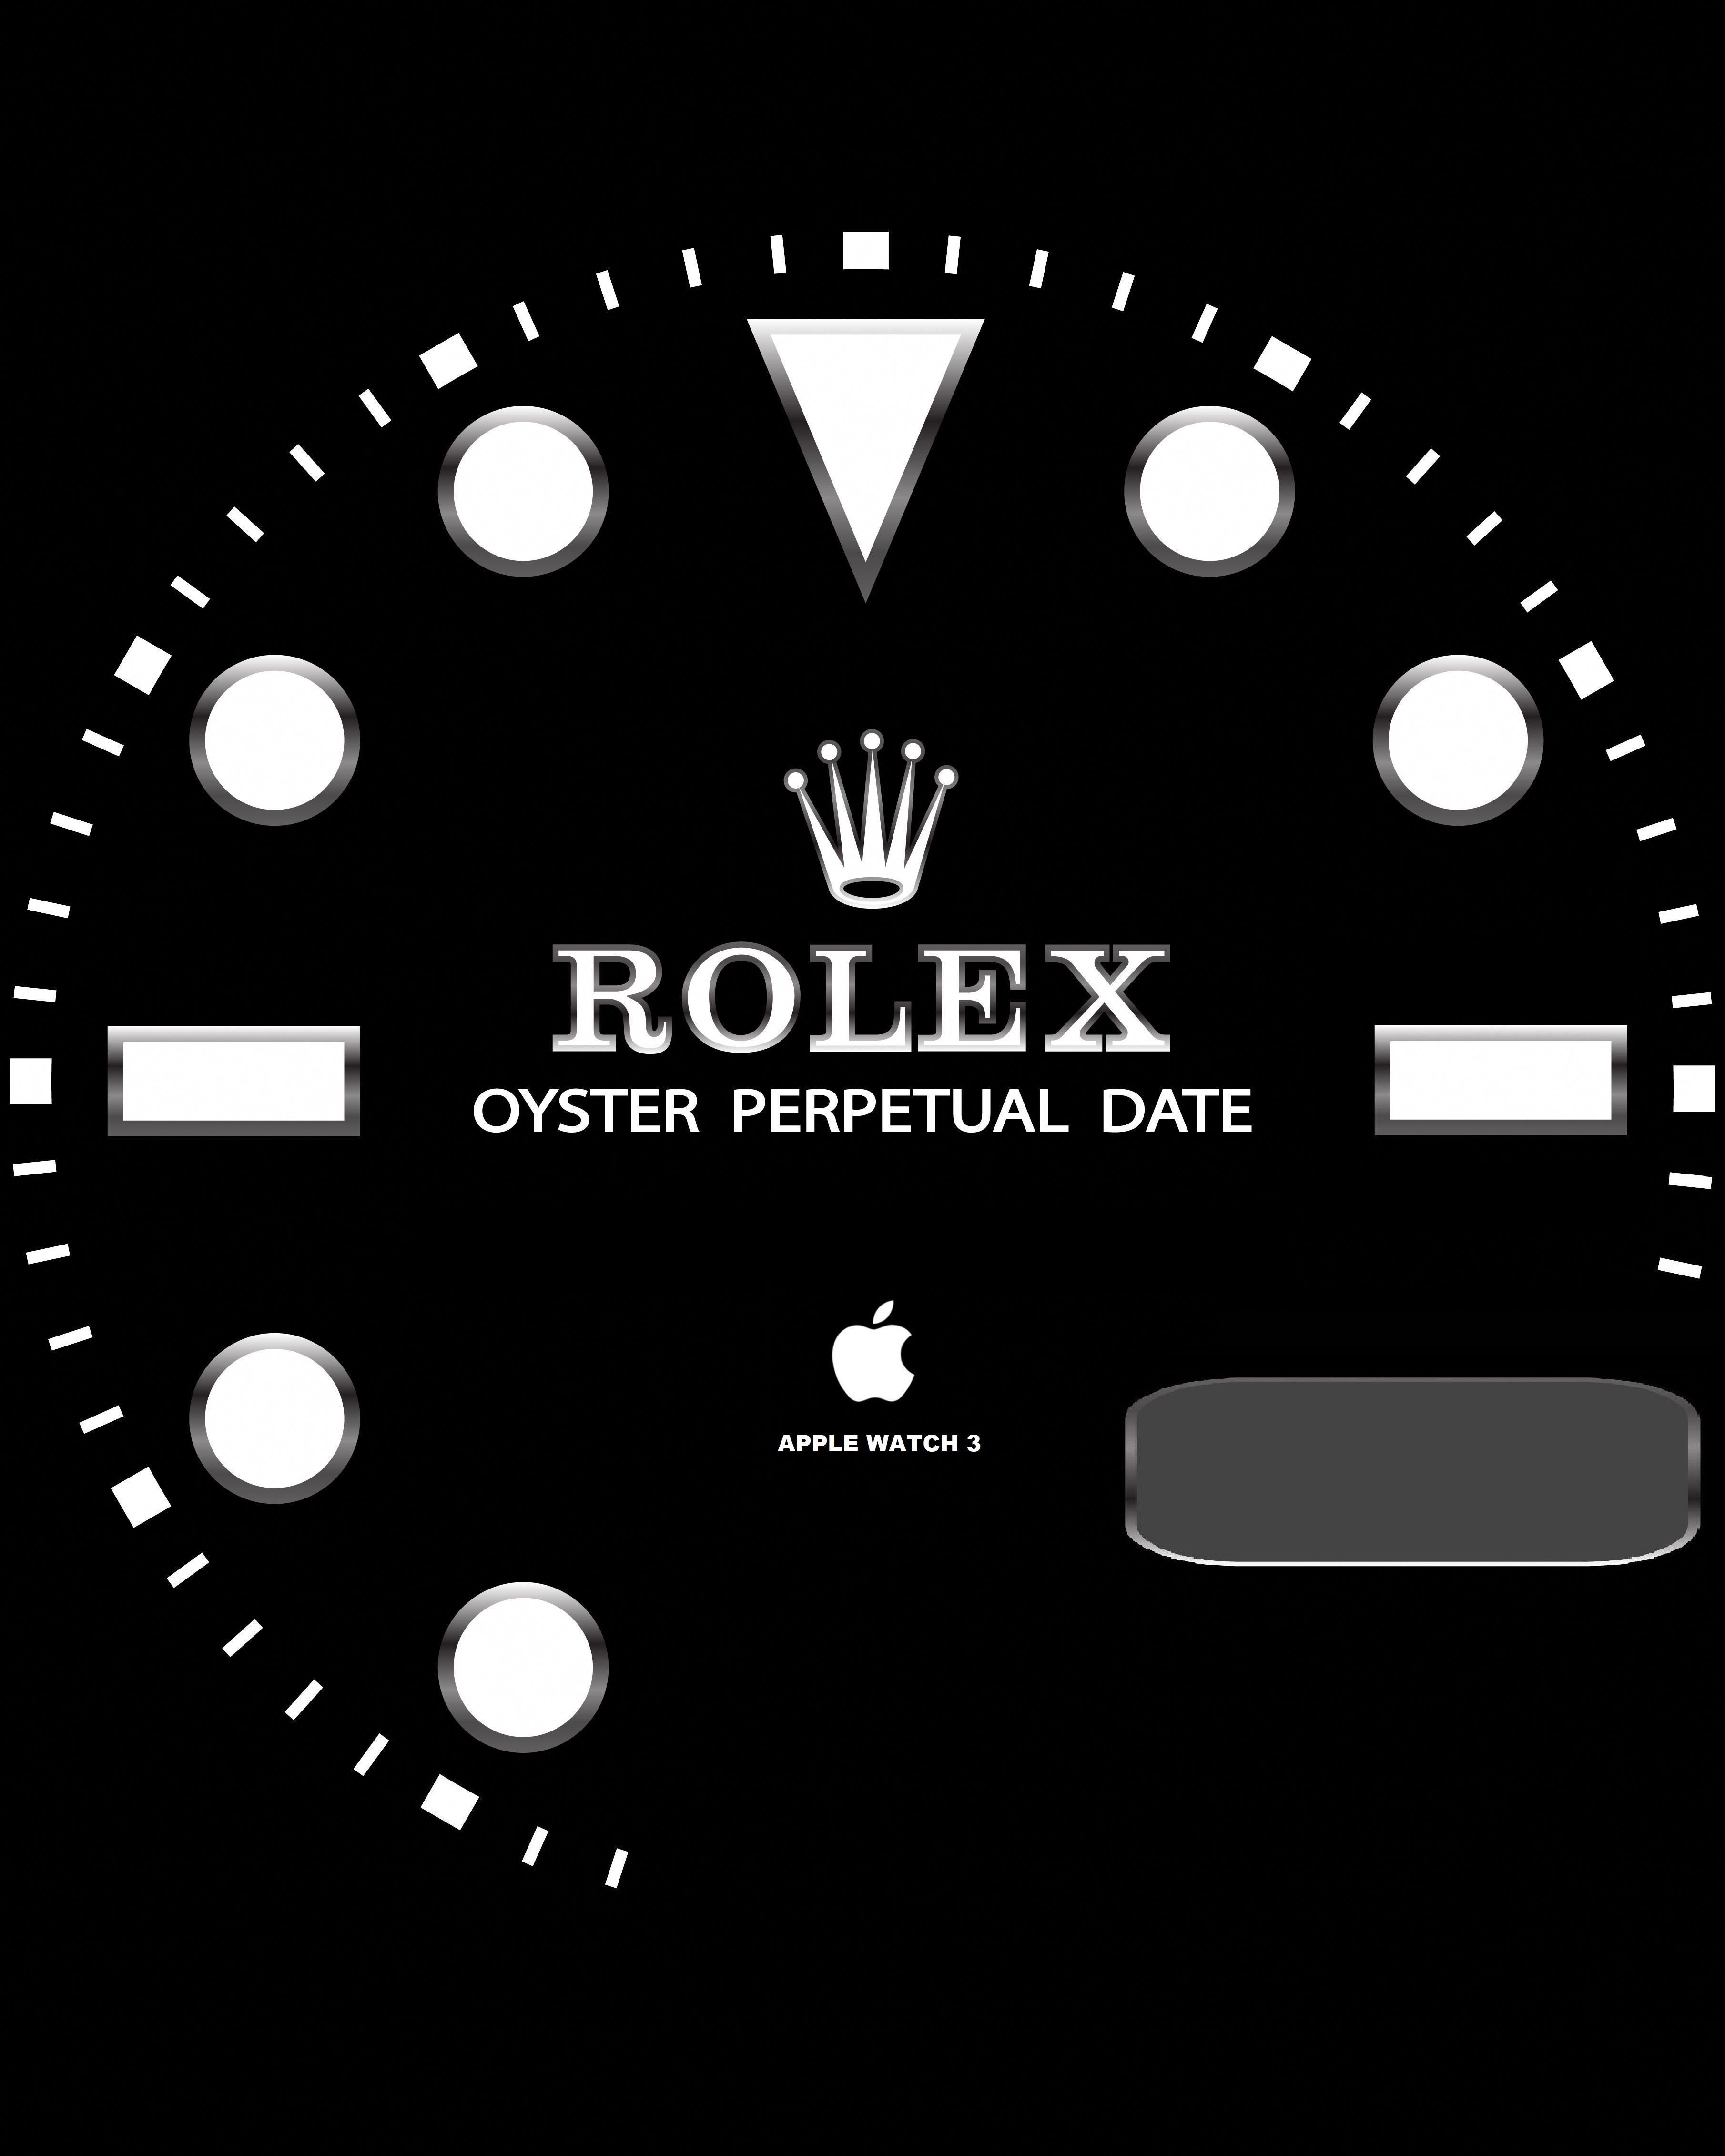 Циферблат часов на айфоне. Циферблаты для Apple IWATCH 7 Rolex. Циферблат Эппл вотч 7. Циферблат ролекс для Apple watch 7. Циферблат Rolex для Apple watch.